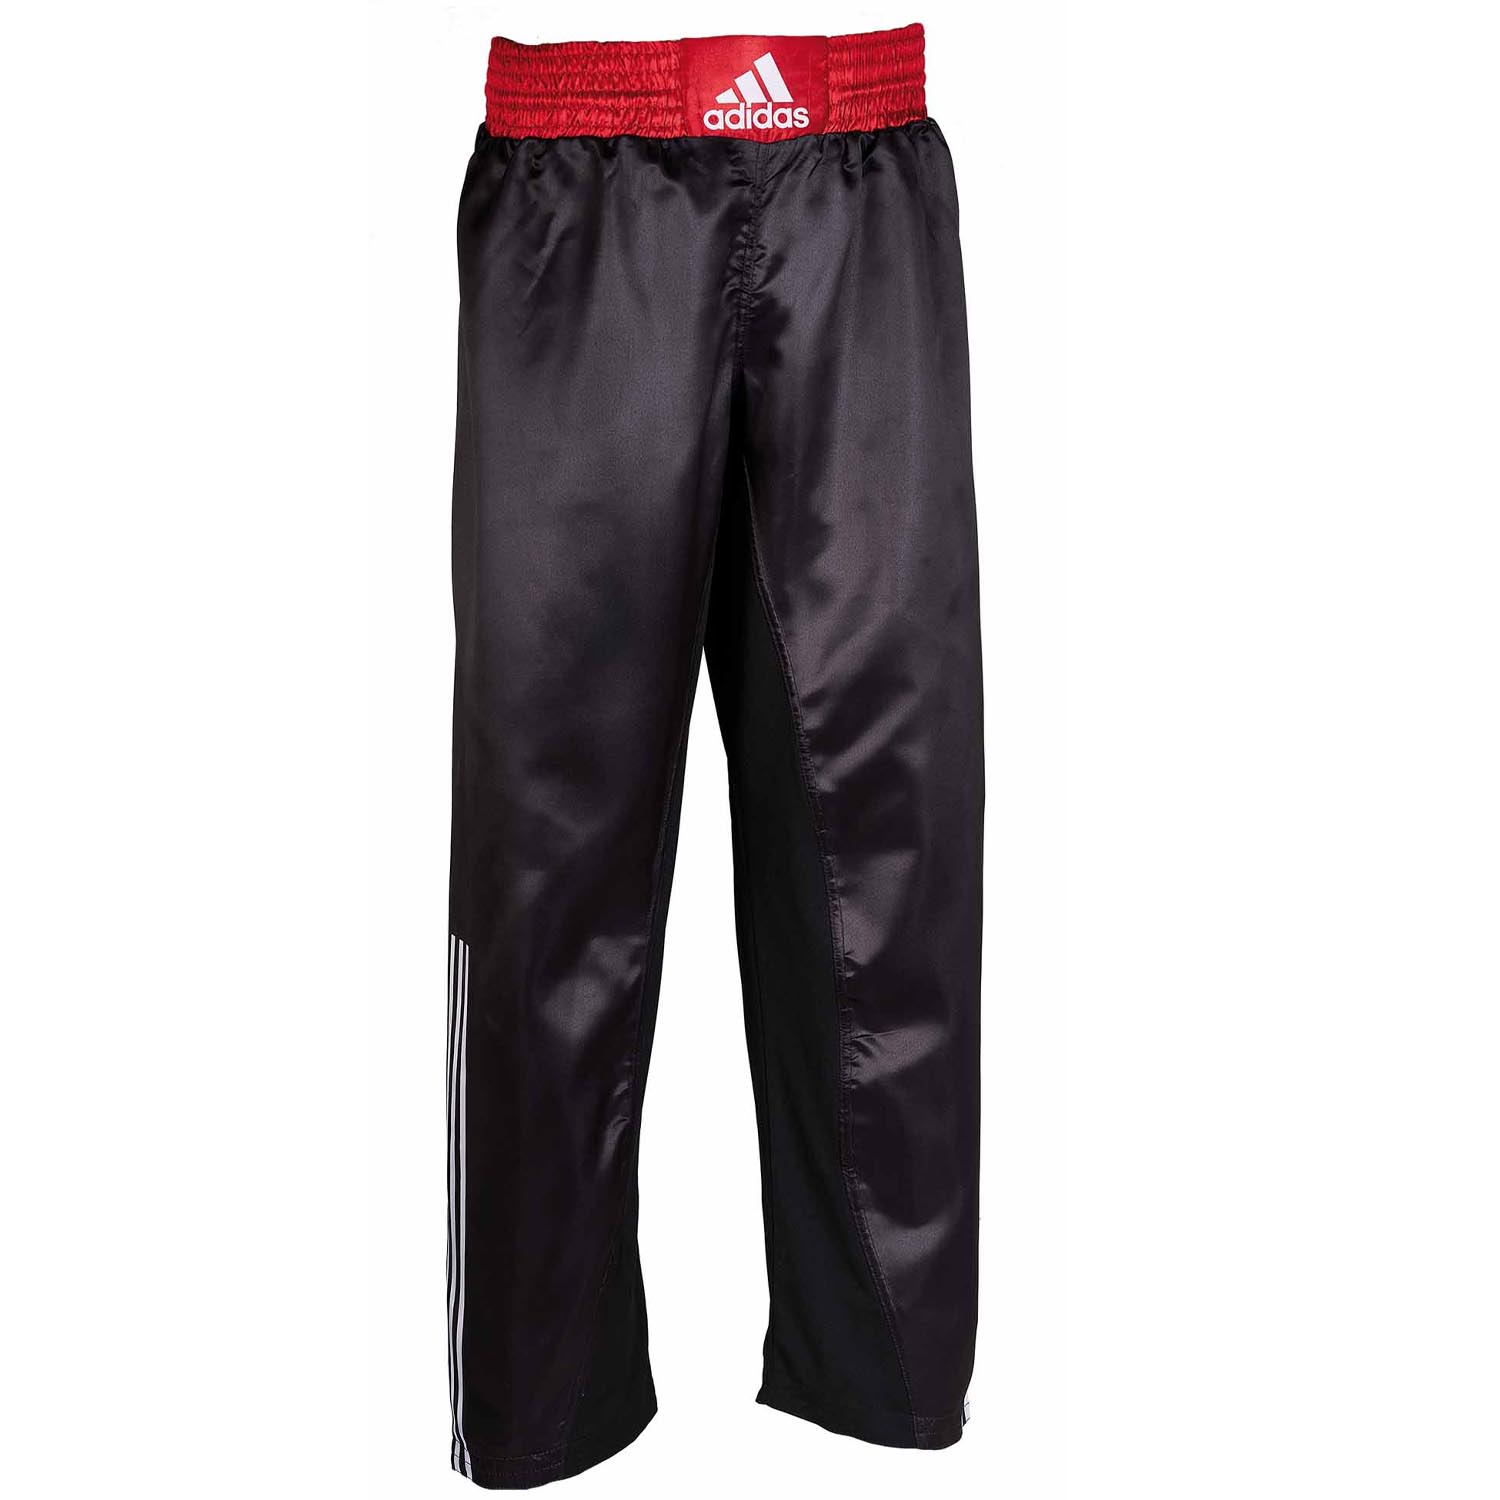 adidas Kickbox Pants, black-red, XL